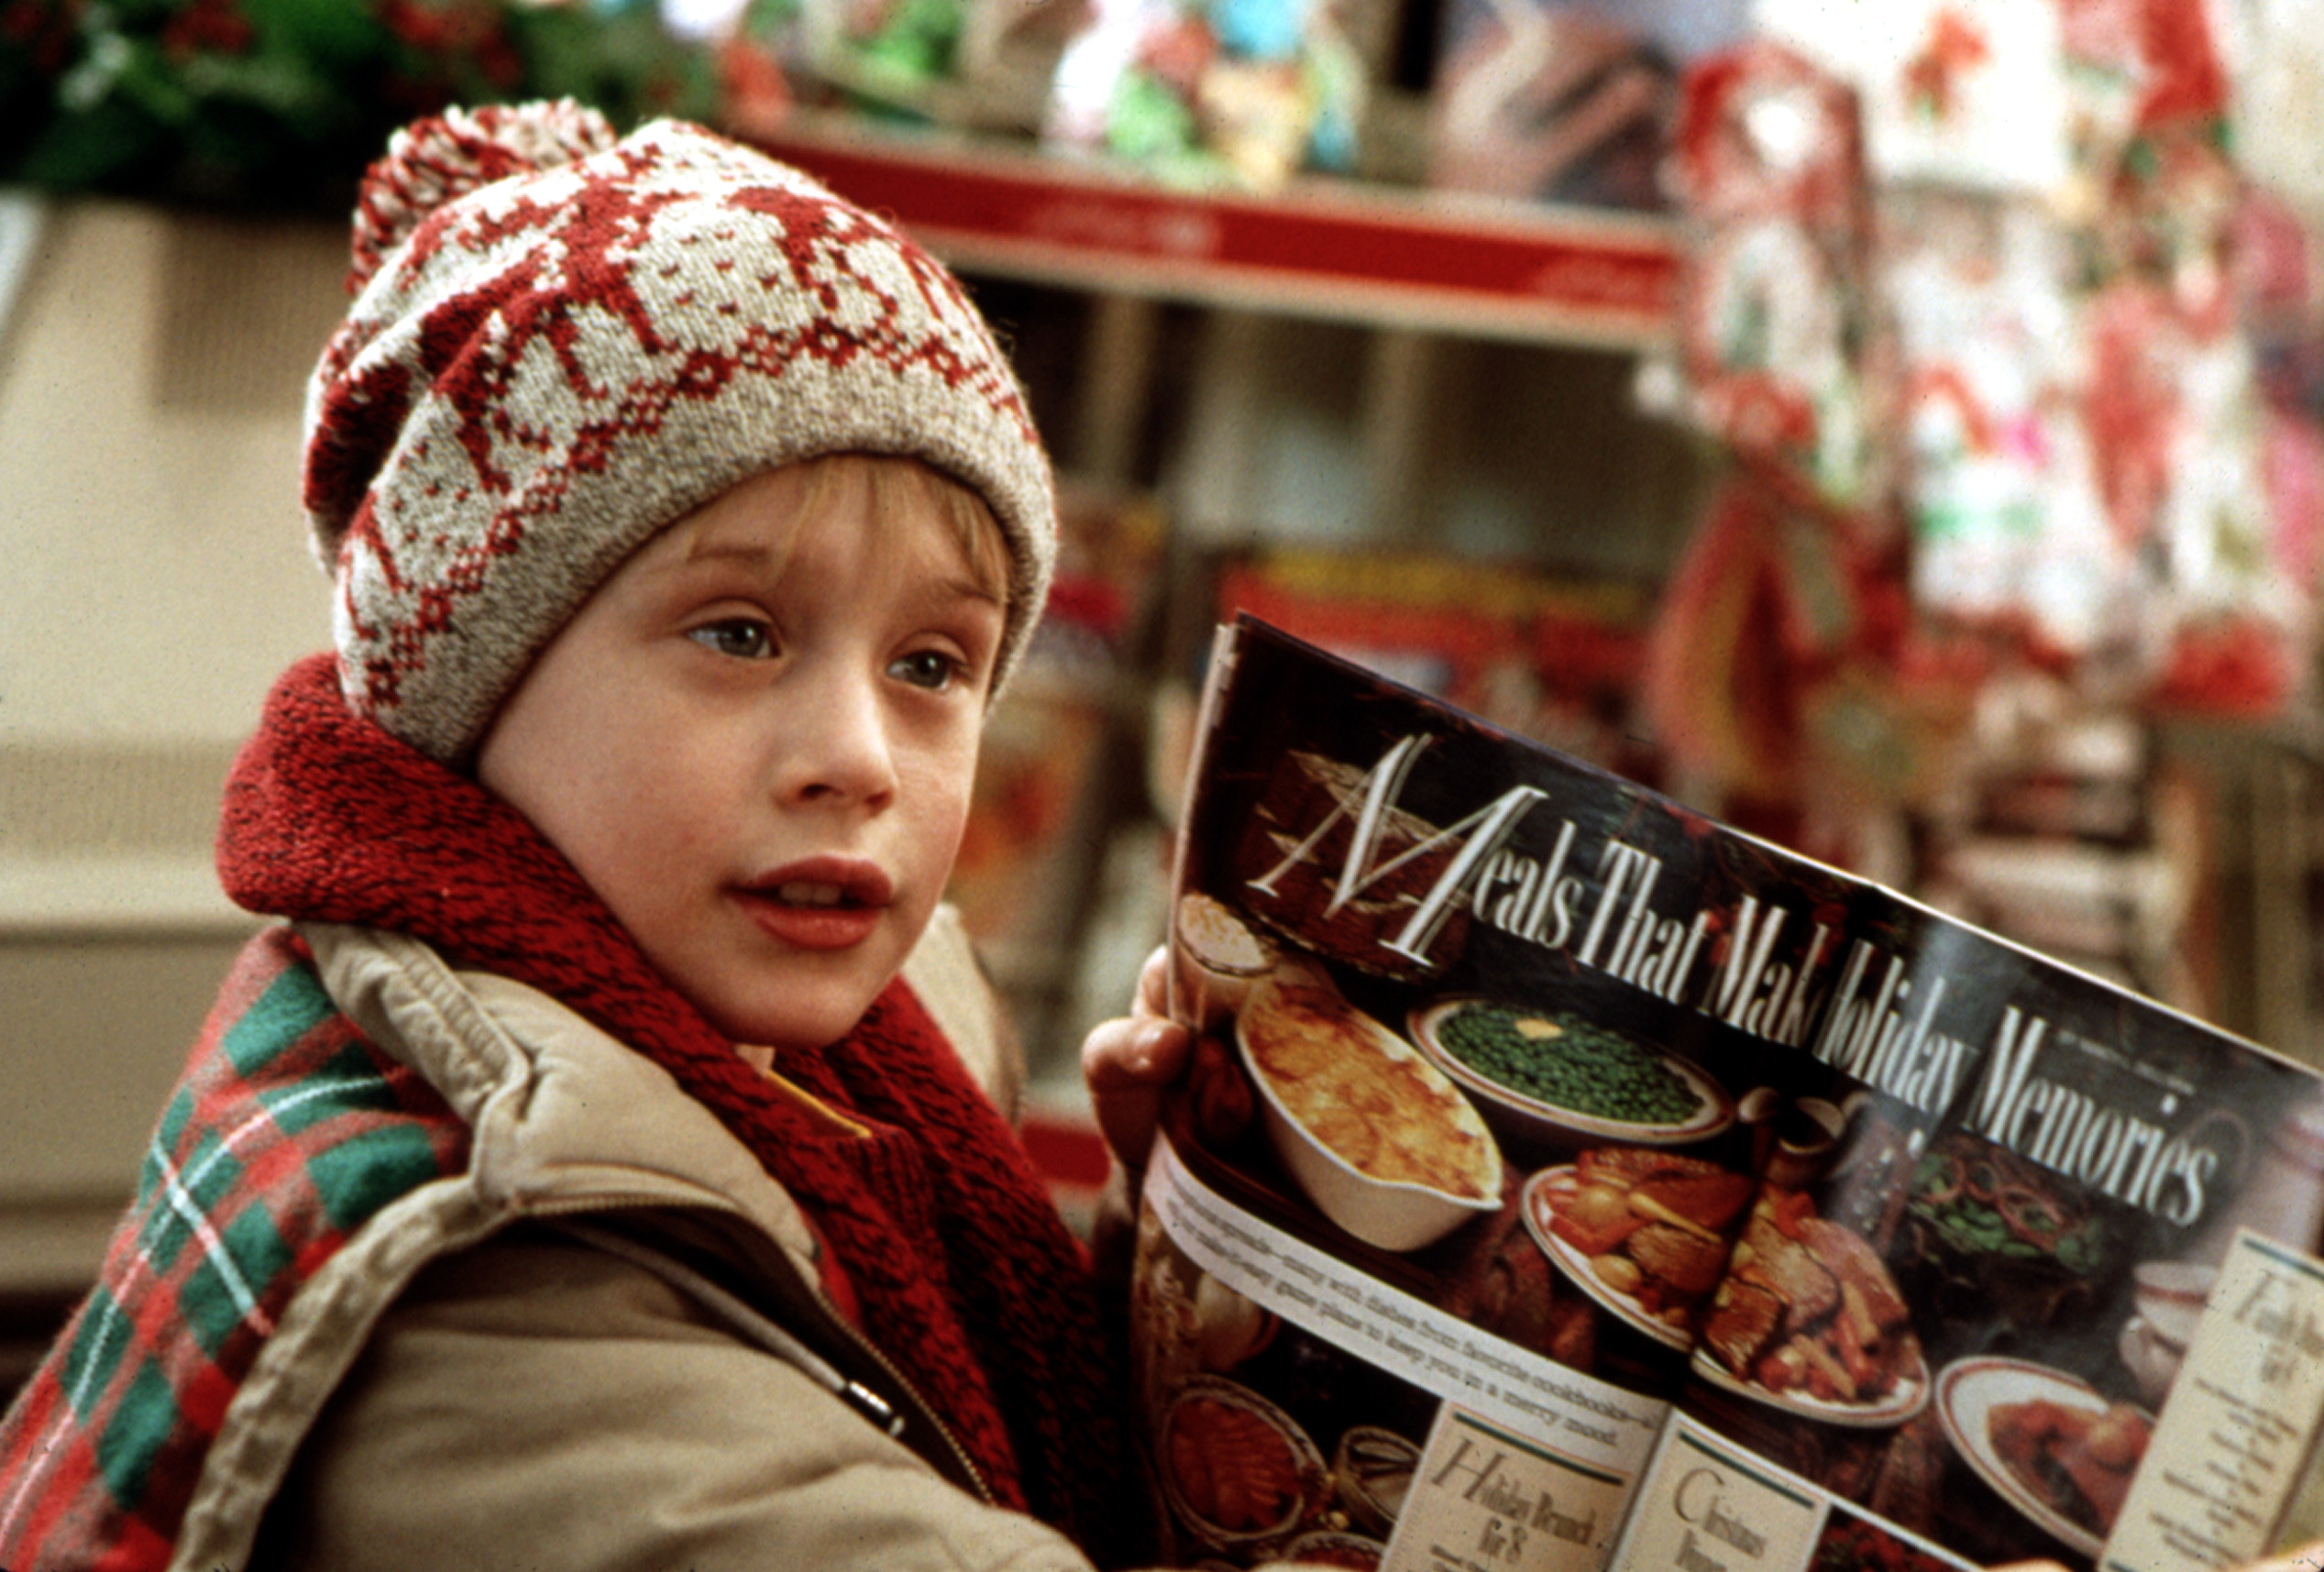 Macaulay Culkin reads a food magazine